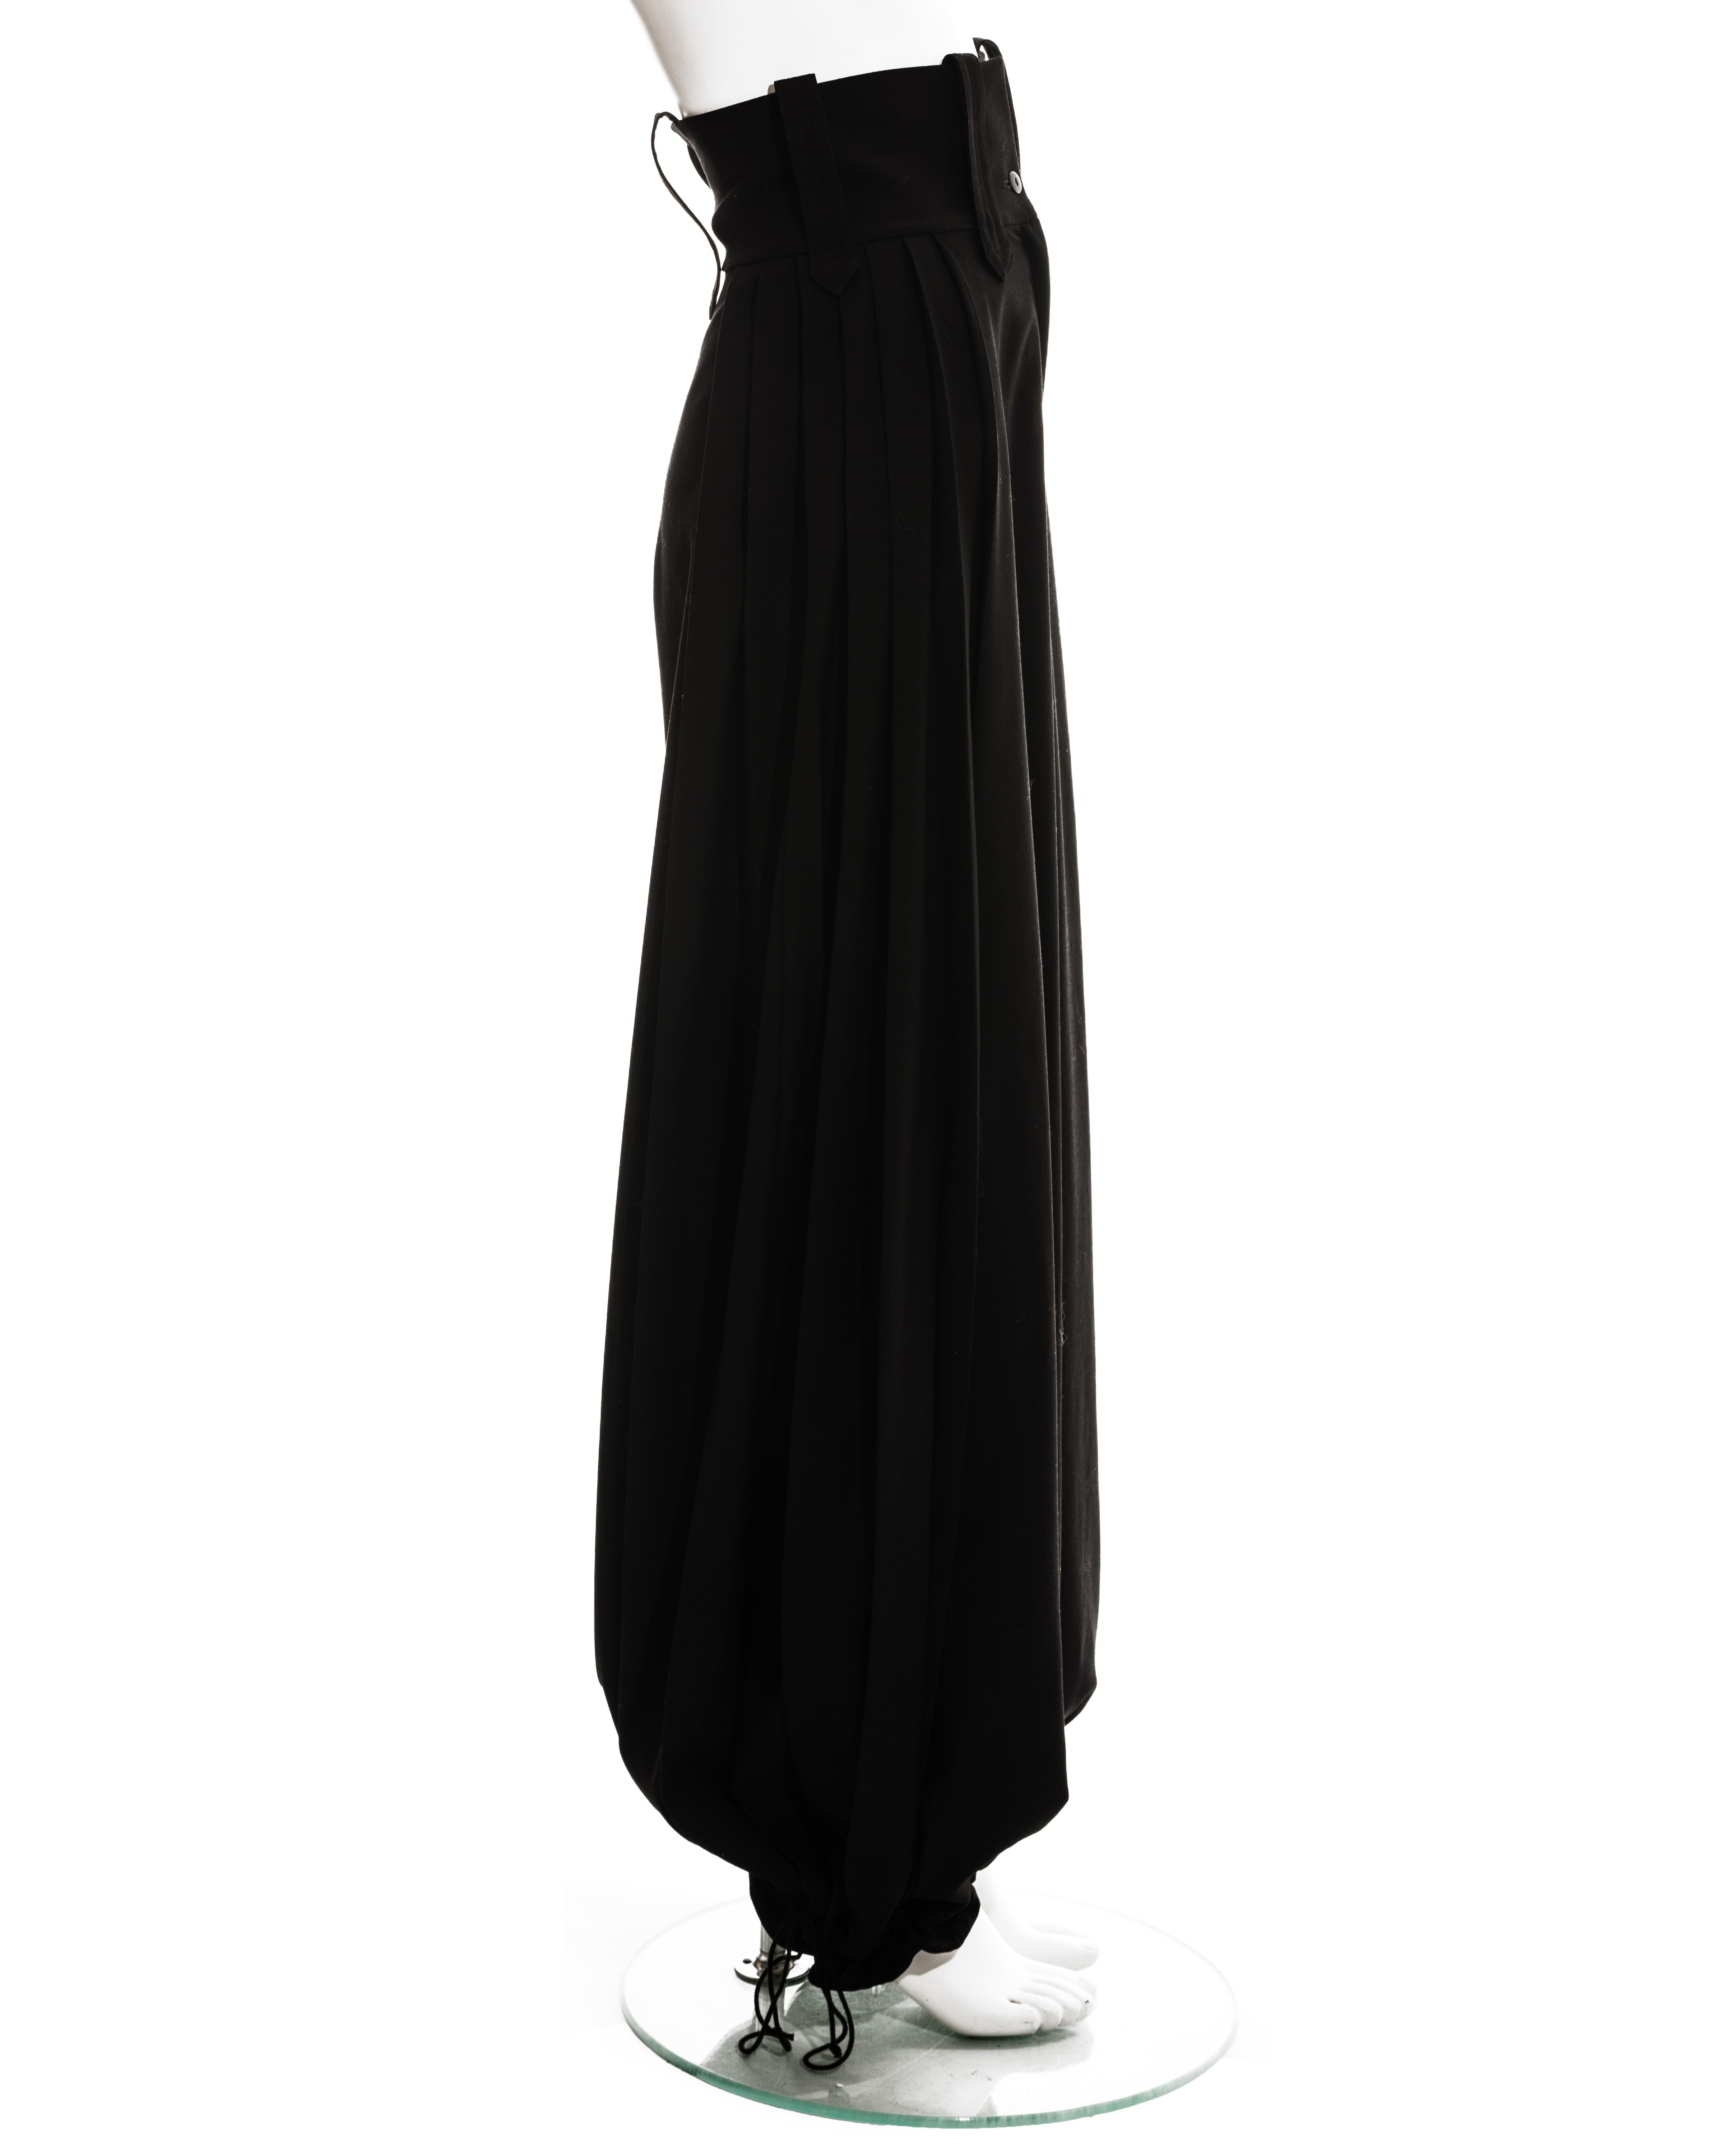 Women's Christian Dior by John Galliano black wool wide leg haram pants, ss 1999